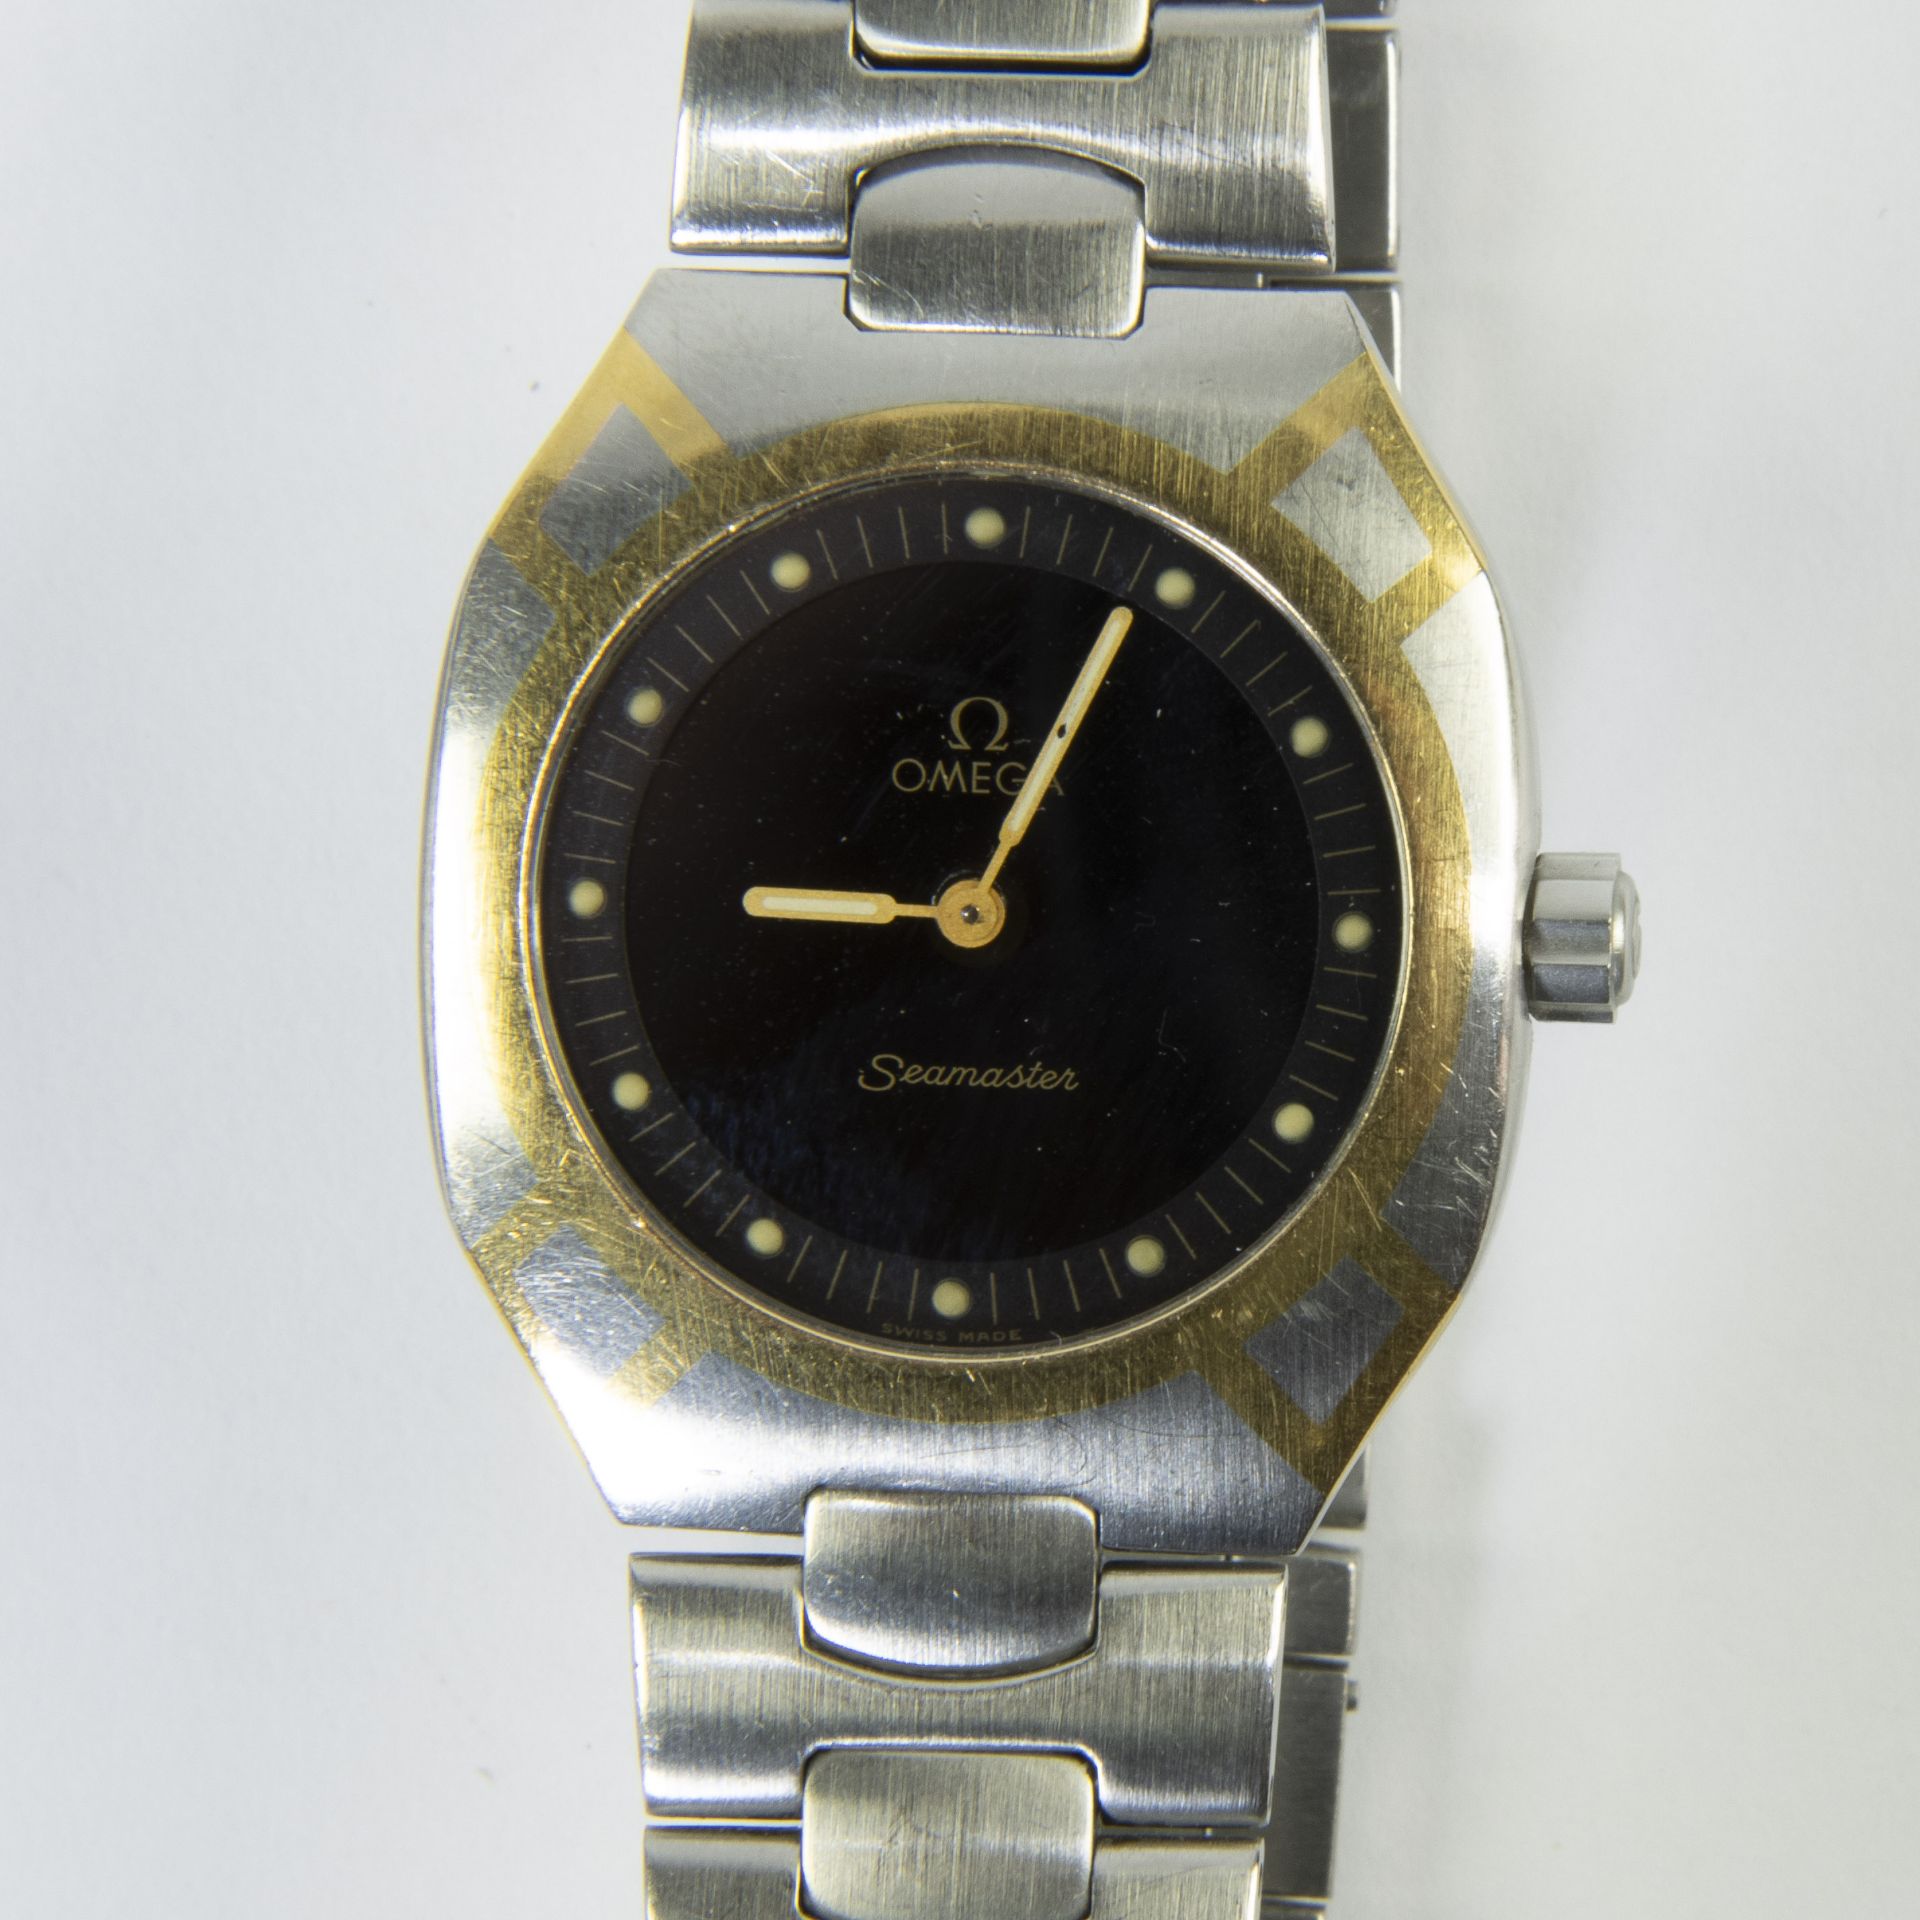 2 wristwatches, FERRARI Swiss made and Omega Seamaster - Bild 2 aus 4